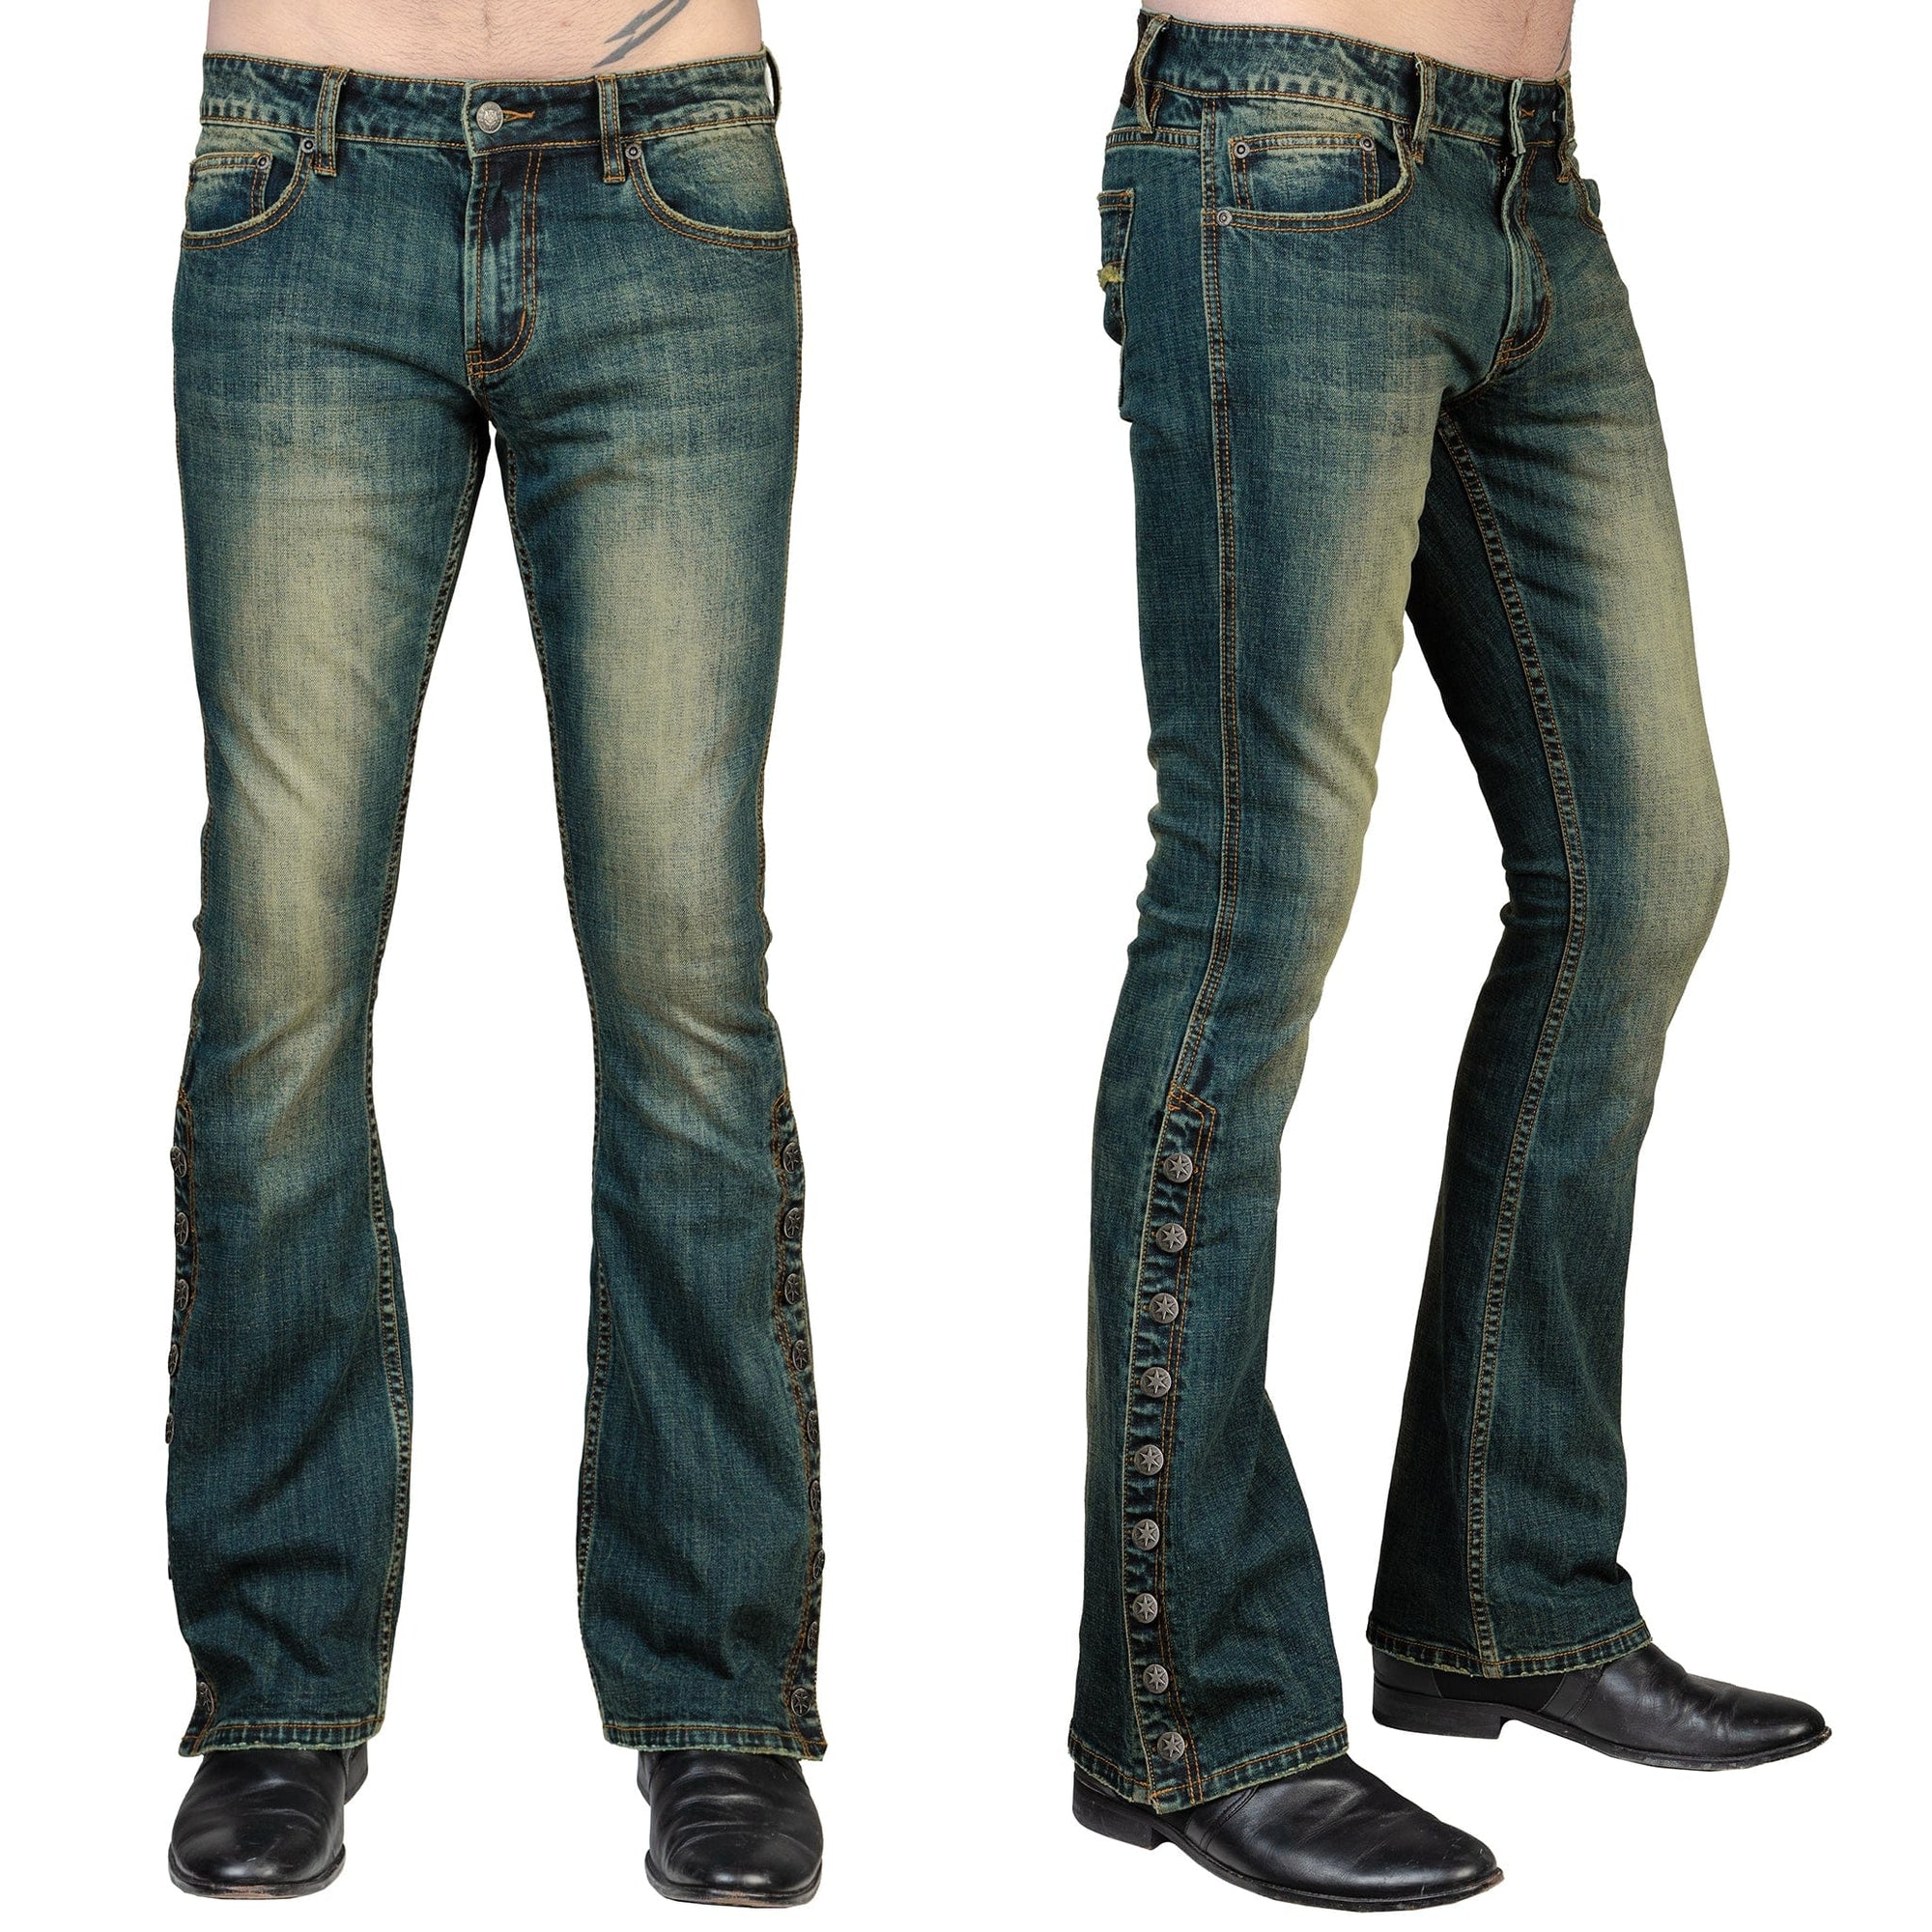 Wornstar Clothing Mens Jeans Hellraiser Denim Pants With Side Buttons - Vintage Blue